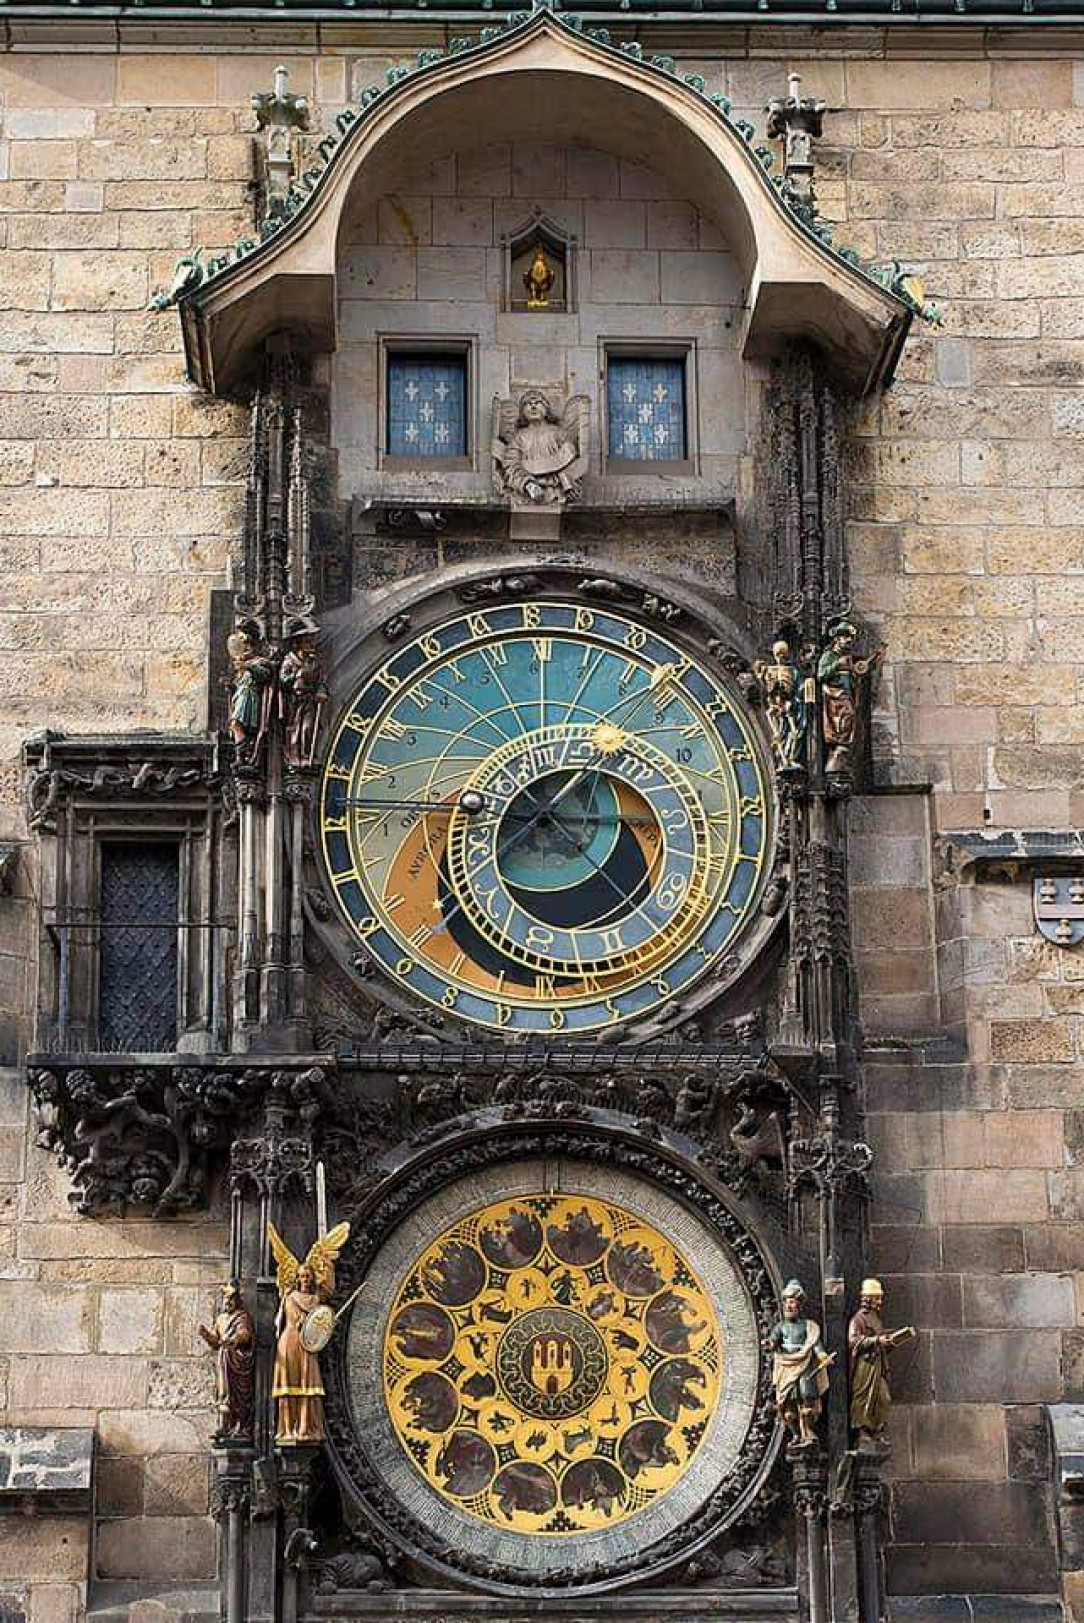 600 yr old astronomical clock in Prague